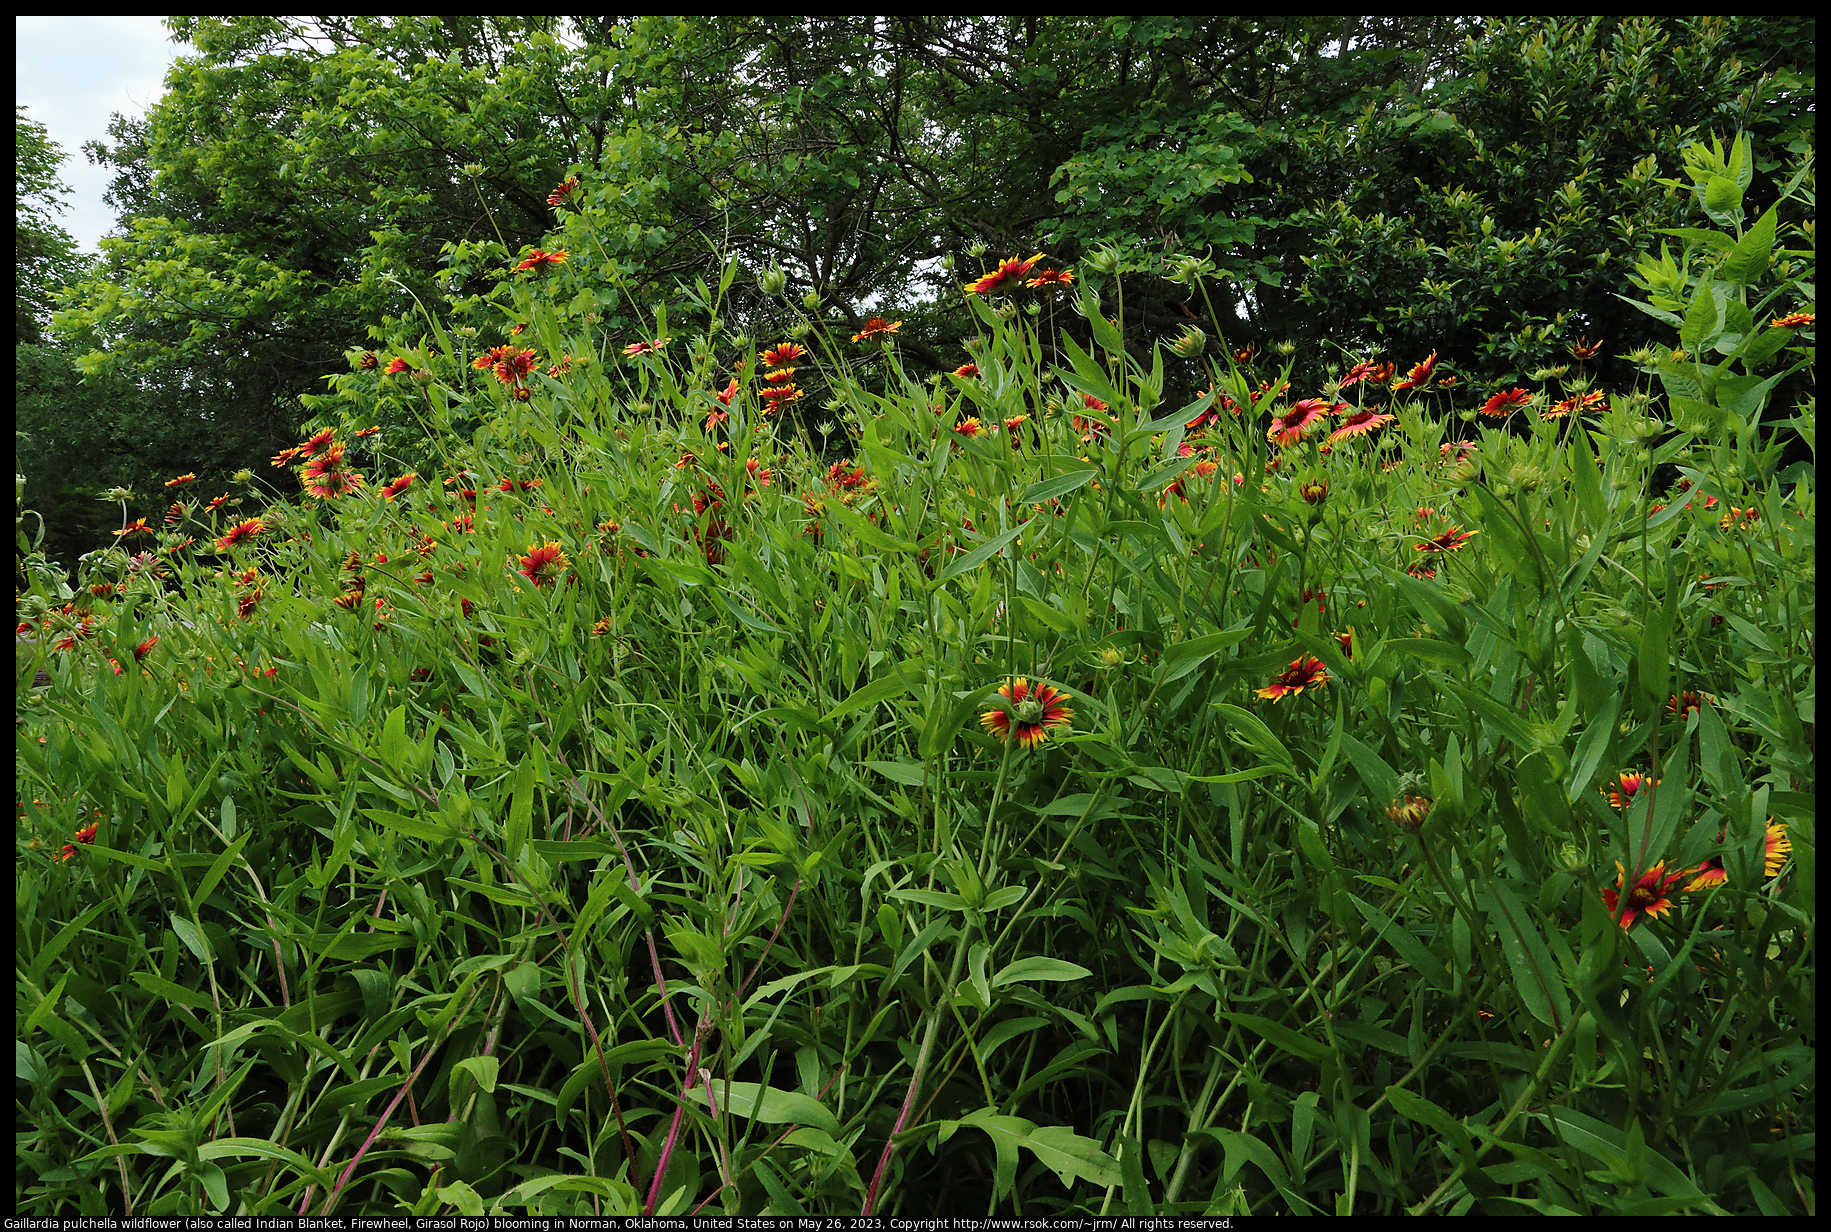 Gaillardia pulchella wildflower (also called Indian Blanket, Firewheel, Girasol Rojo) blooming in Norman, Oklahoma, United States on May 26, 2023